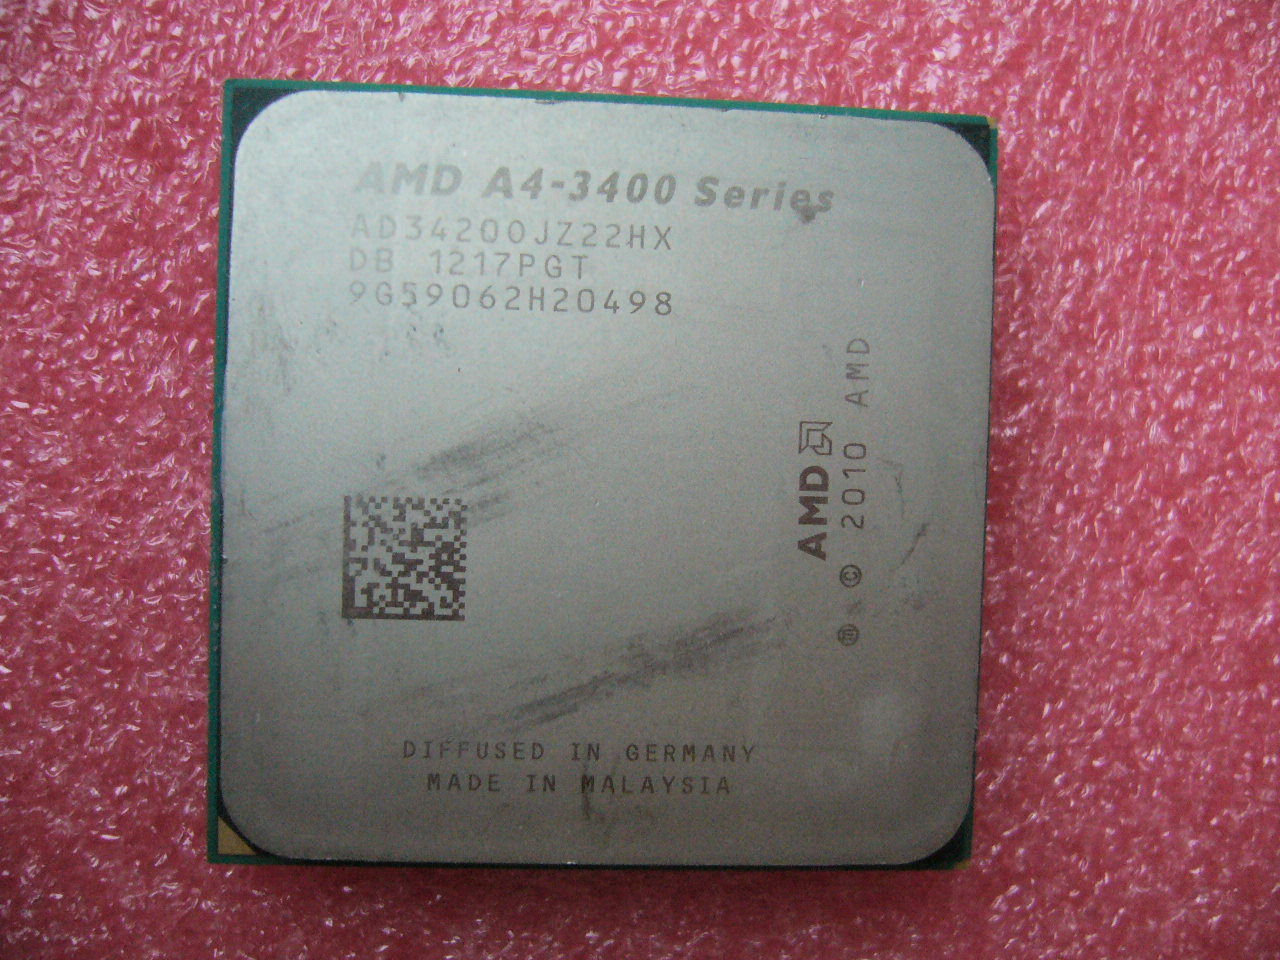 QTY 1x AMD Fusion A4-3420 2.8 GHz Dual-Core (AD3420OJZ22HX) CPU Socket FM1